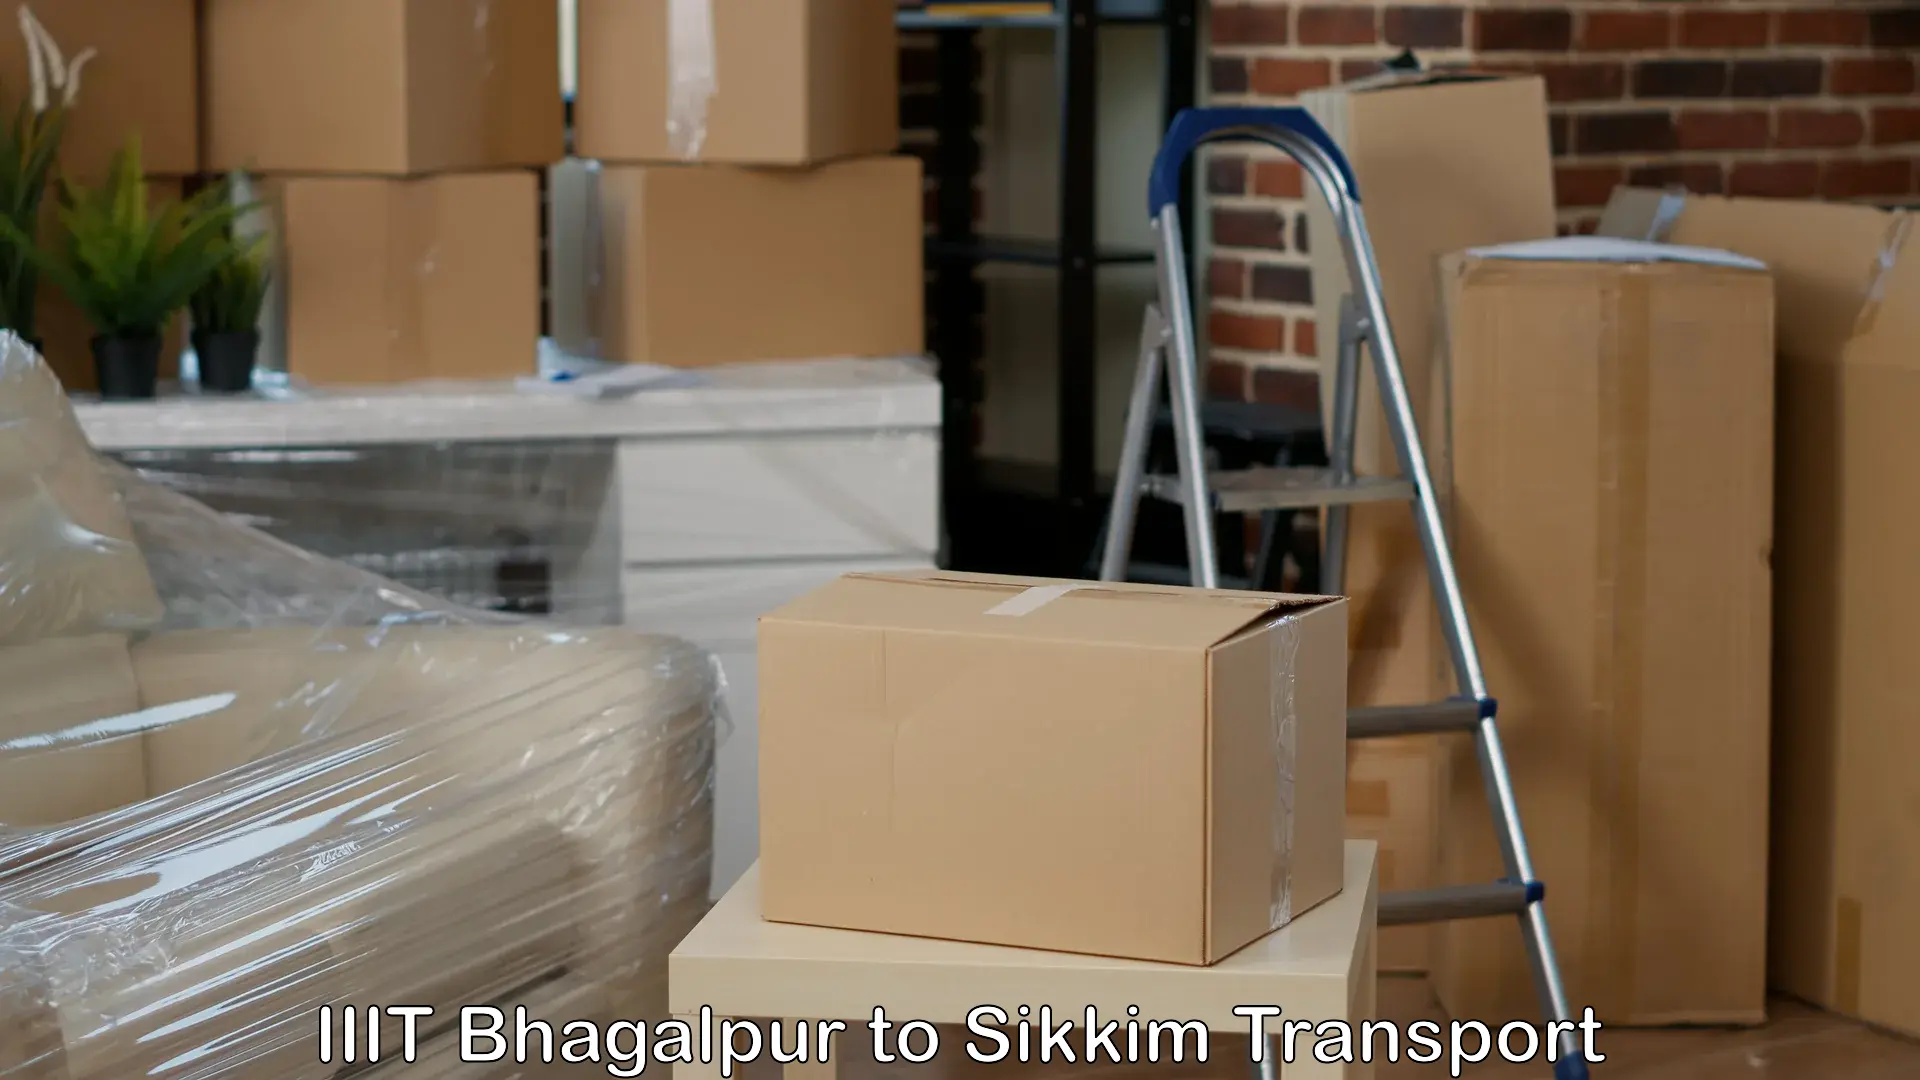 Truck transport companies in India IIIT Bhagalpur to West Sikkim